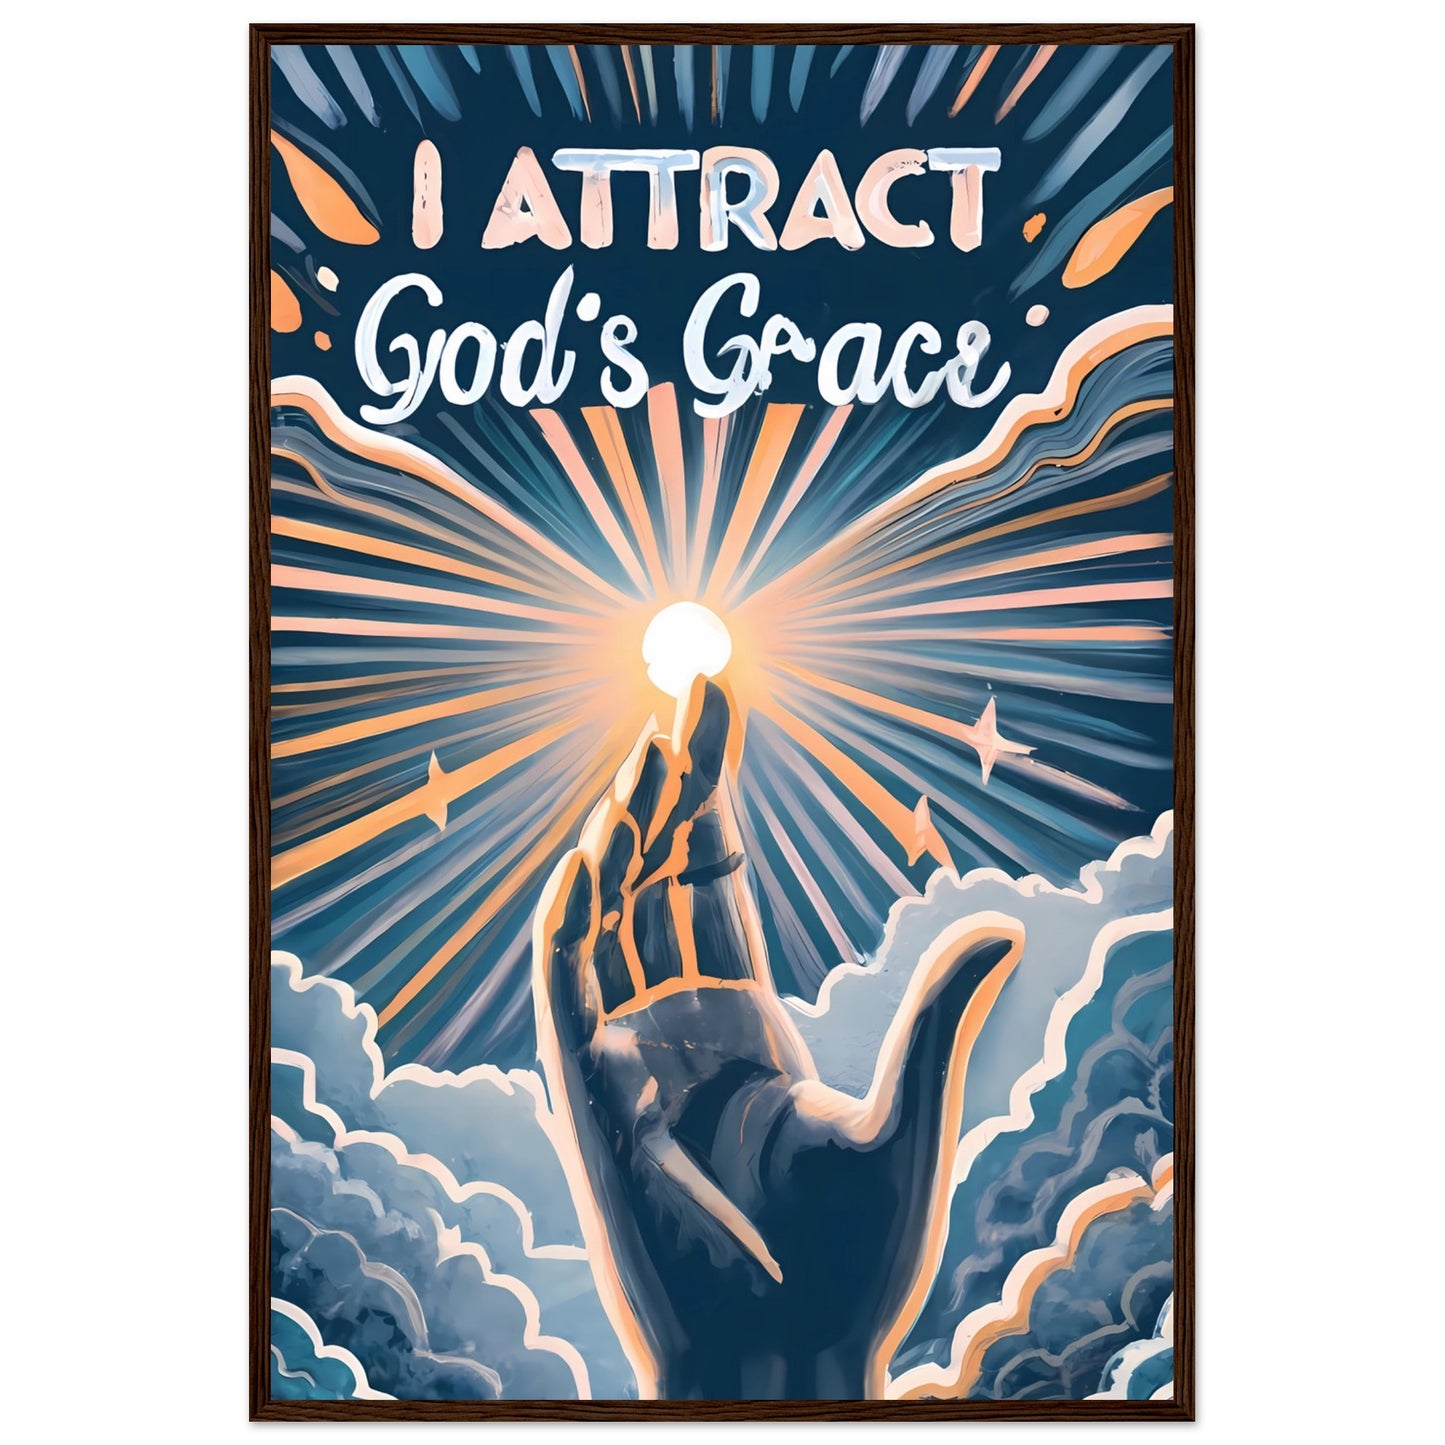 I Attract God's Grace Framed Print